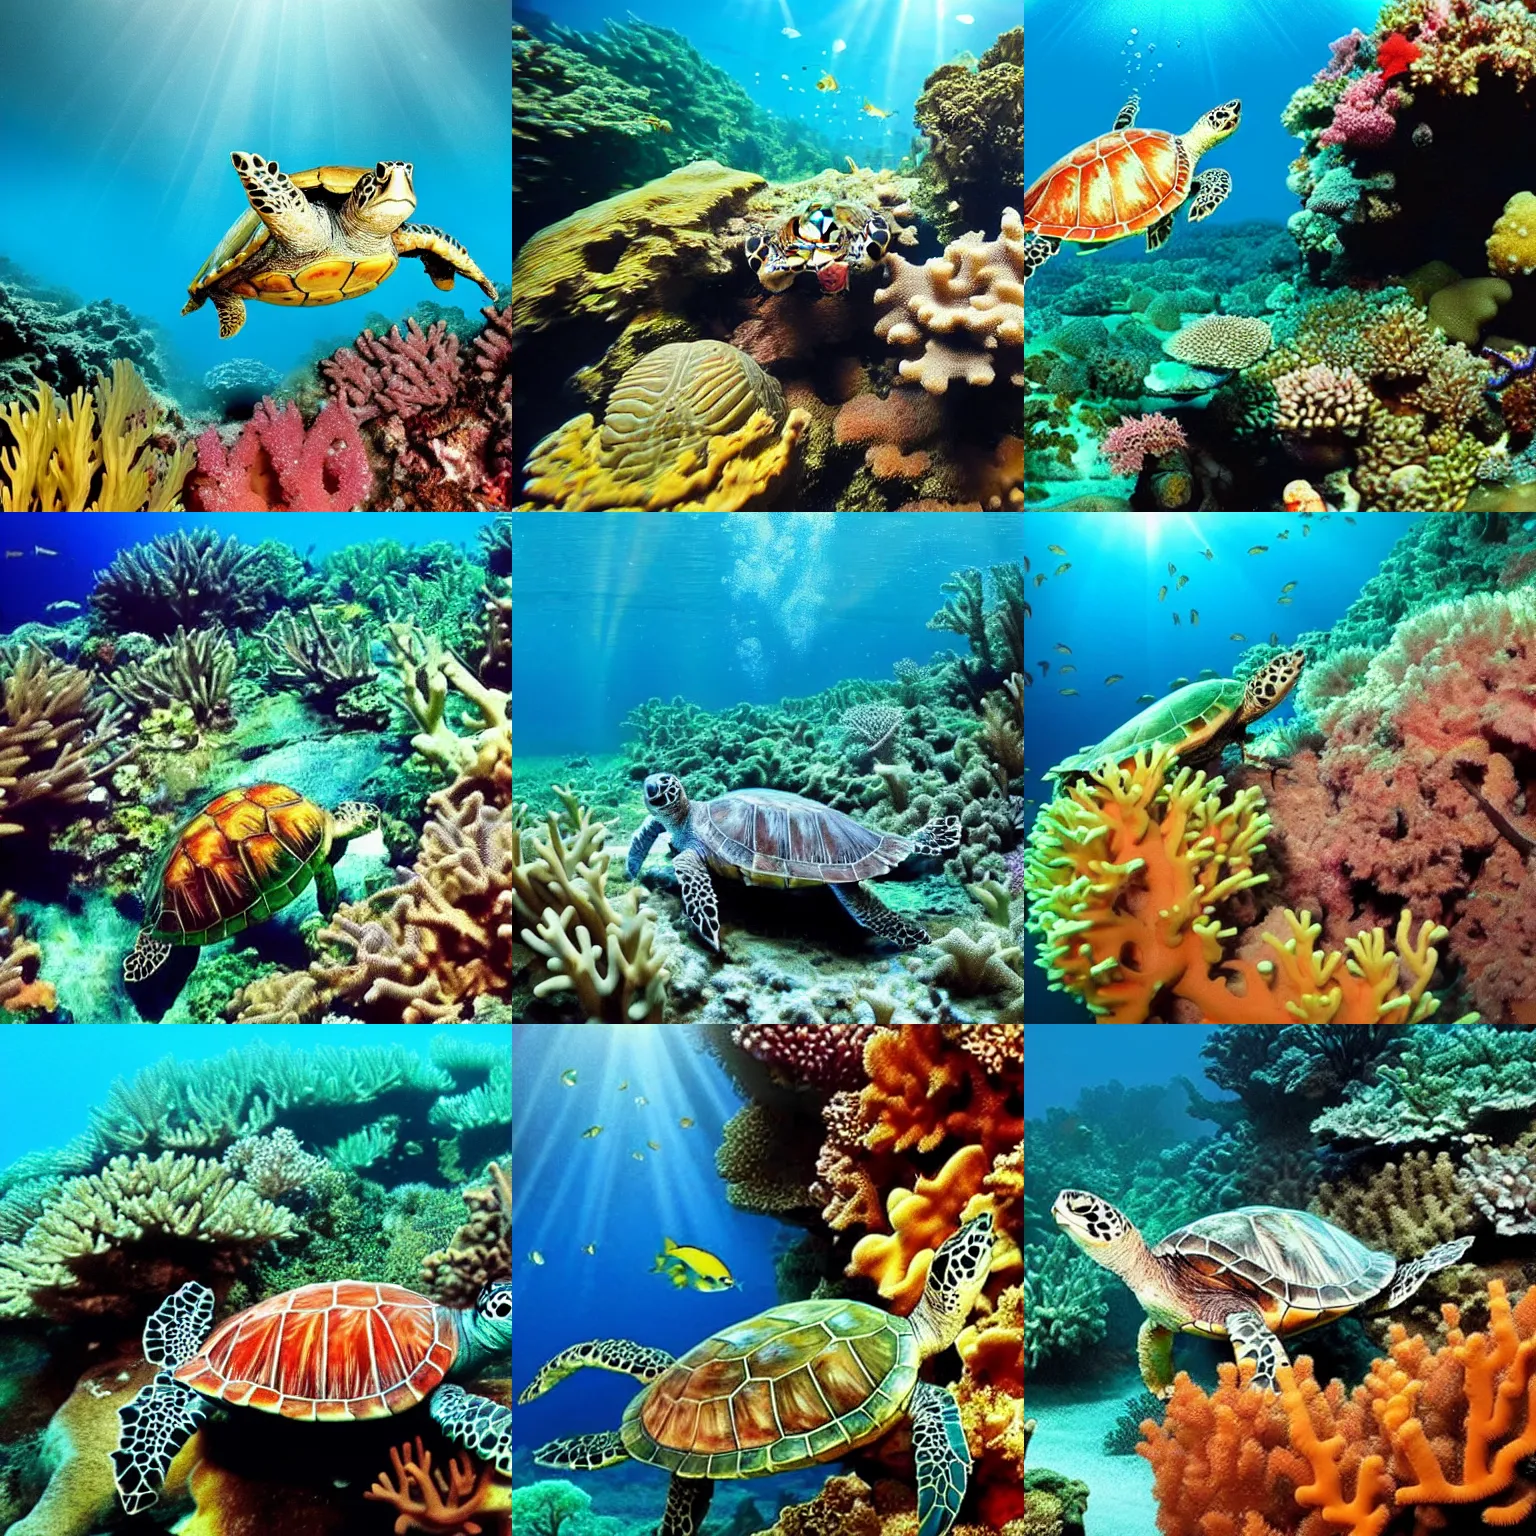 Prompt: Underwater coral reef sunbeams beautiful swimming turtle award winning nature documentary, David Attenborough